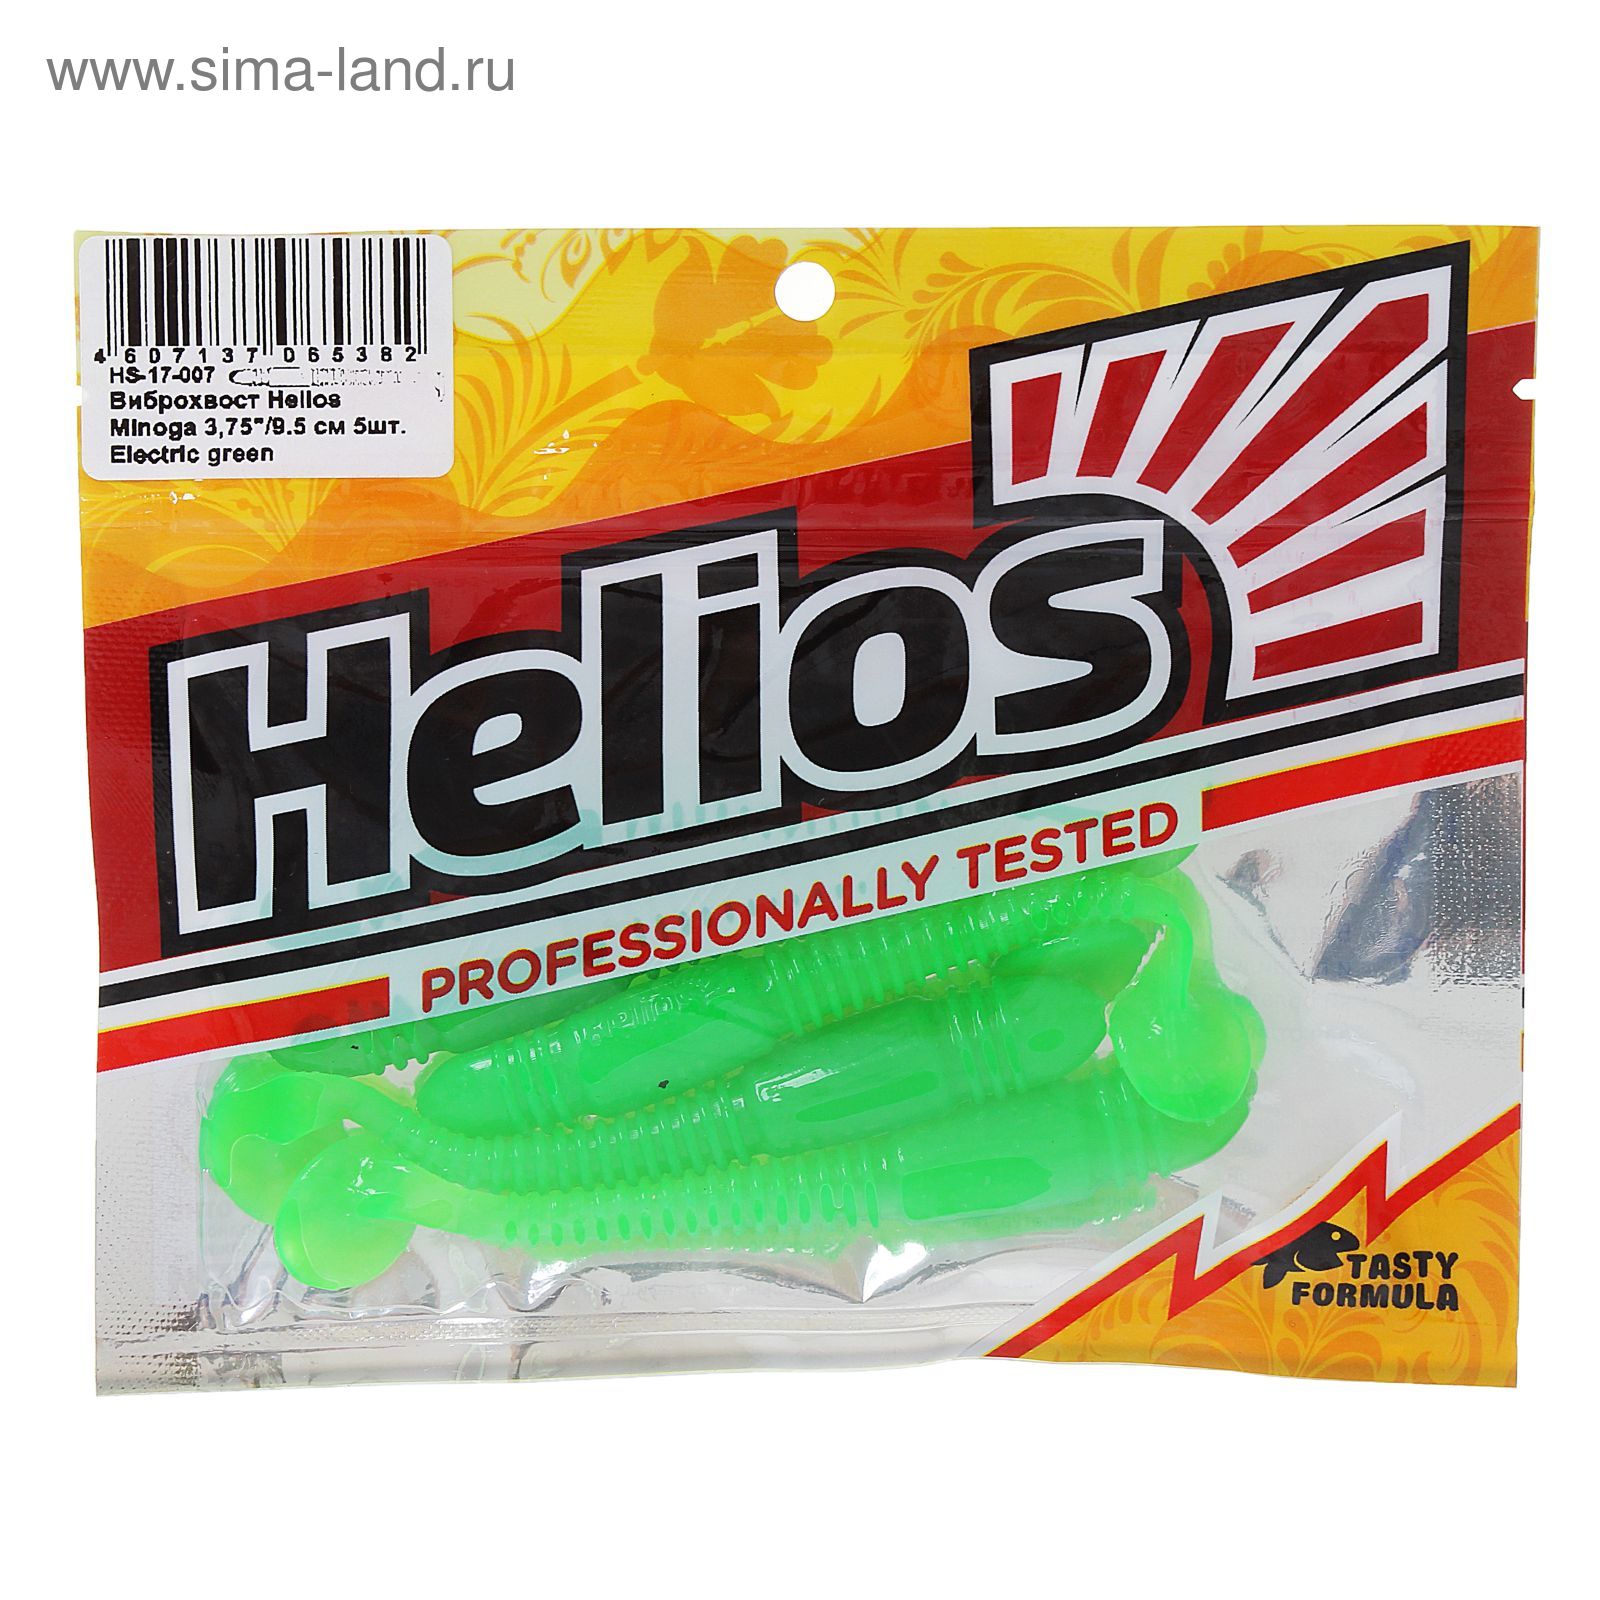 Виброхвост Helios Minoga 9,5 см Electric green HS-17-007 (набор 5 шт)